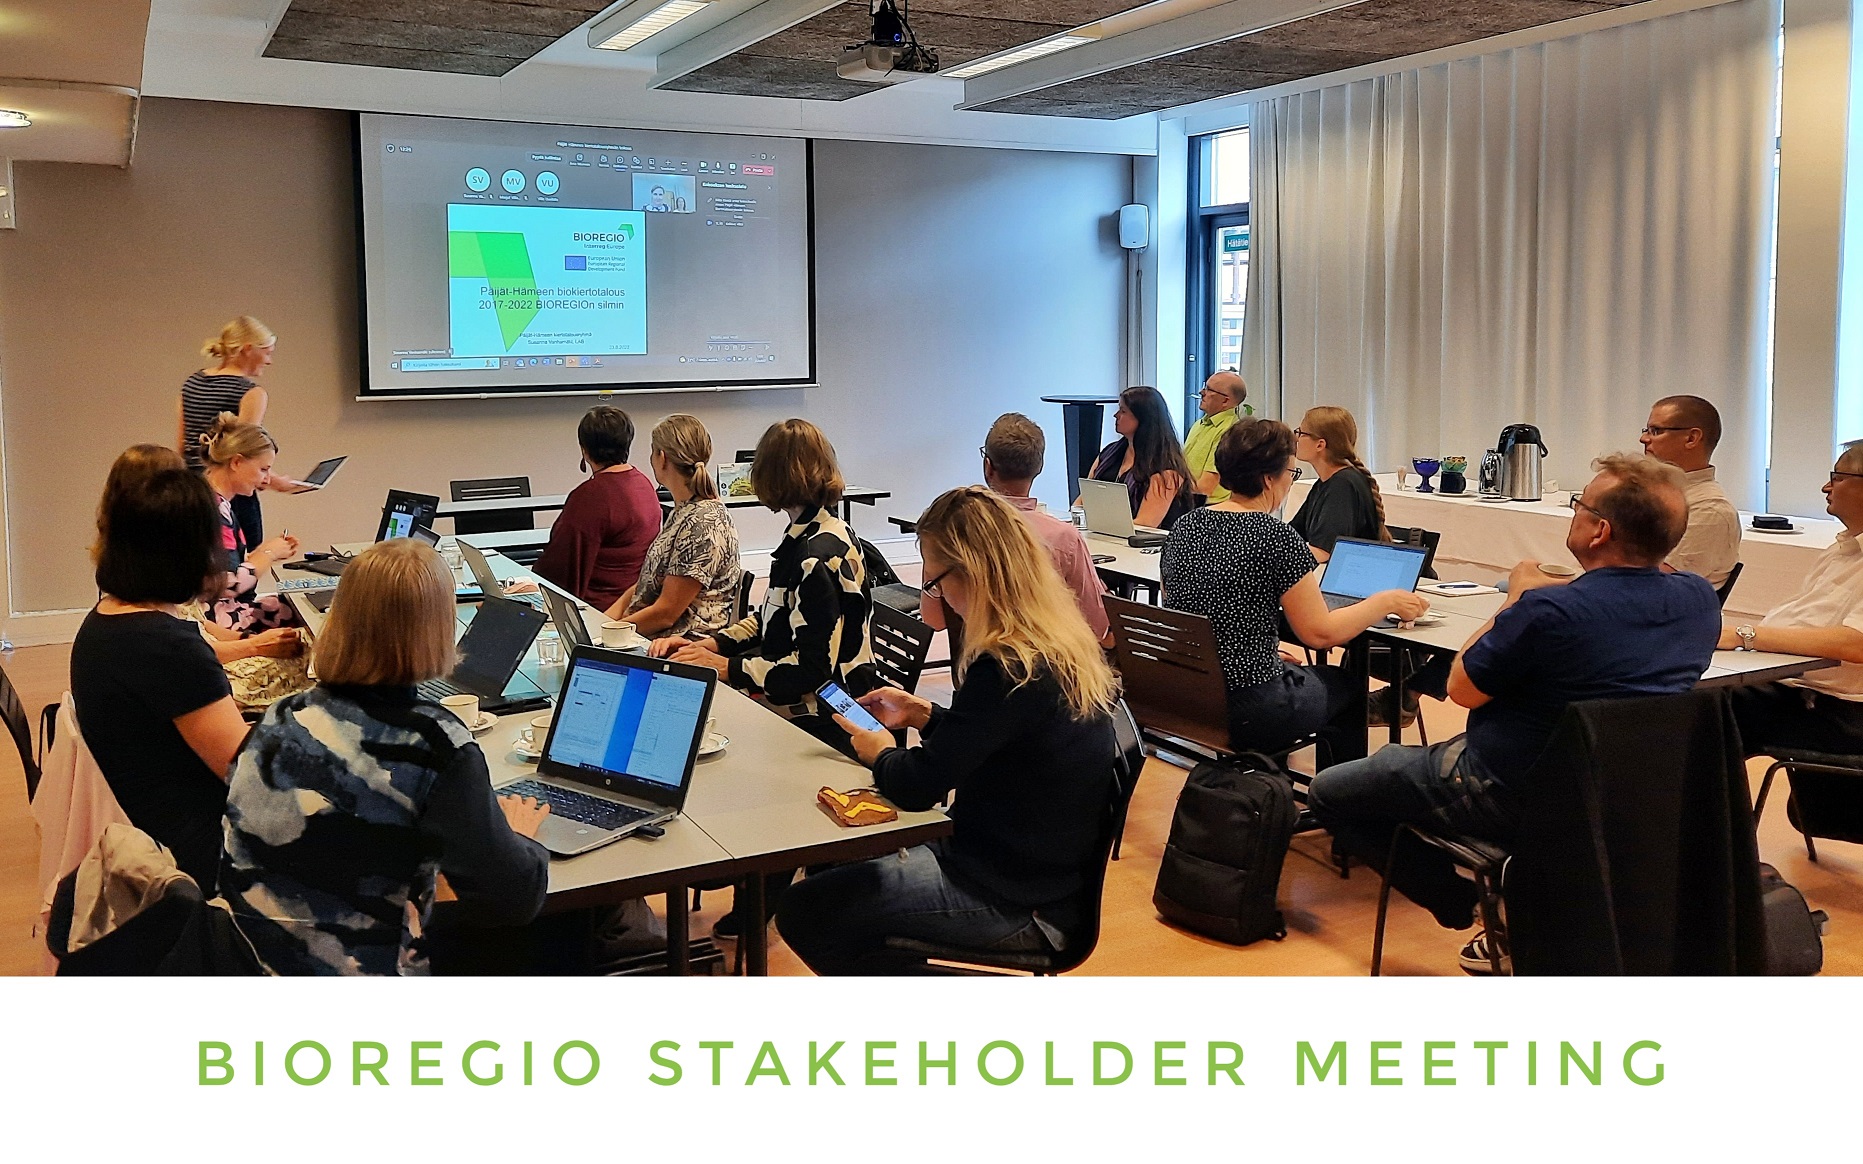 BIOREGIO Stakeholder Meeting in Lahti, Finland